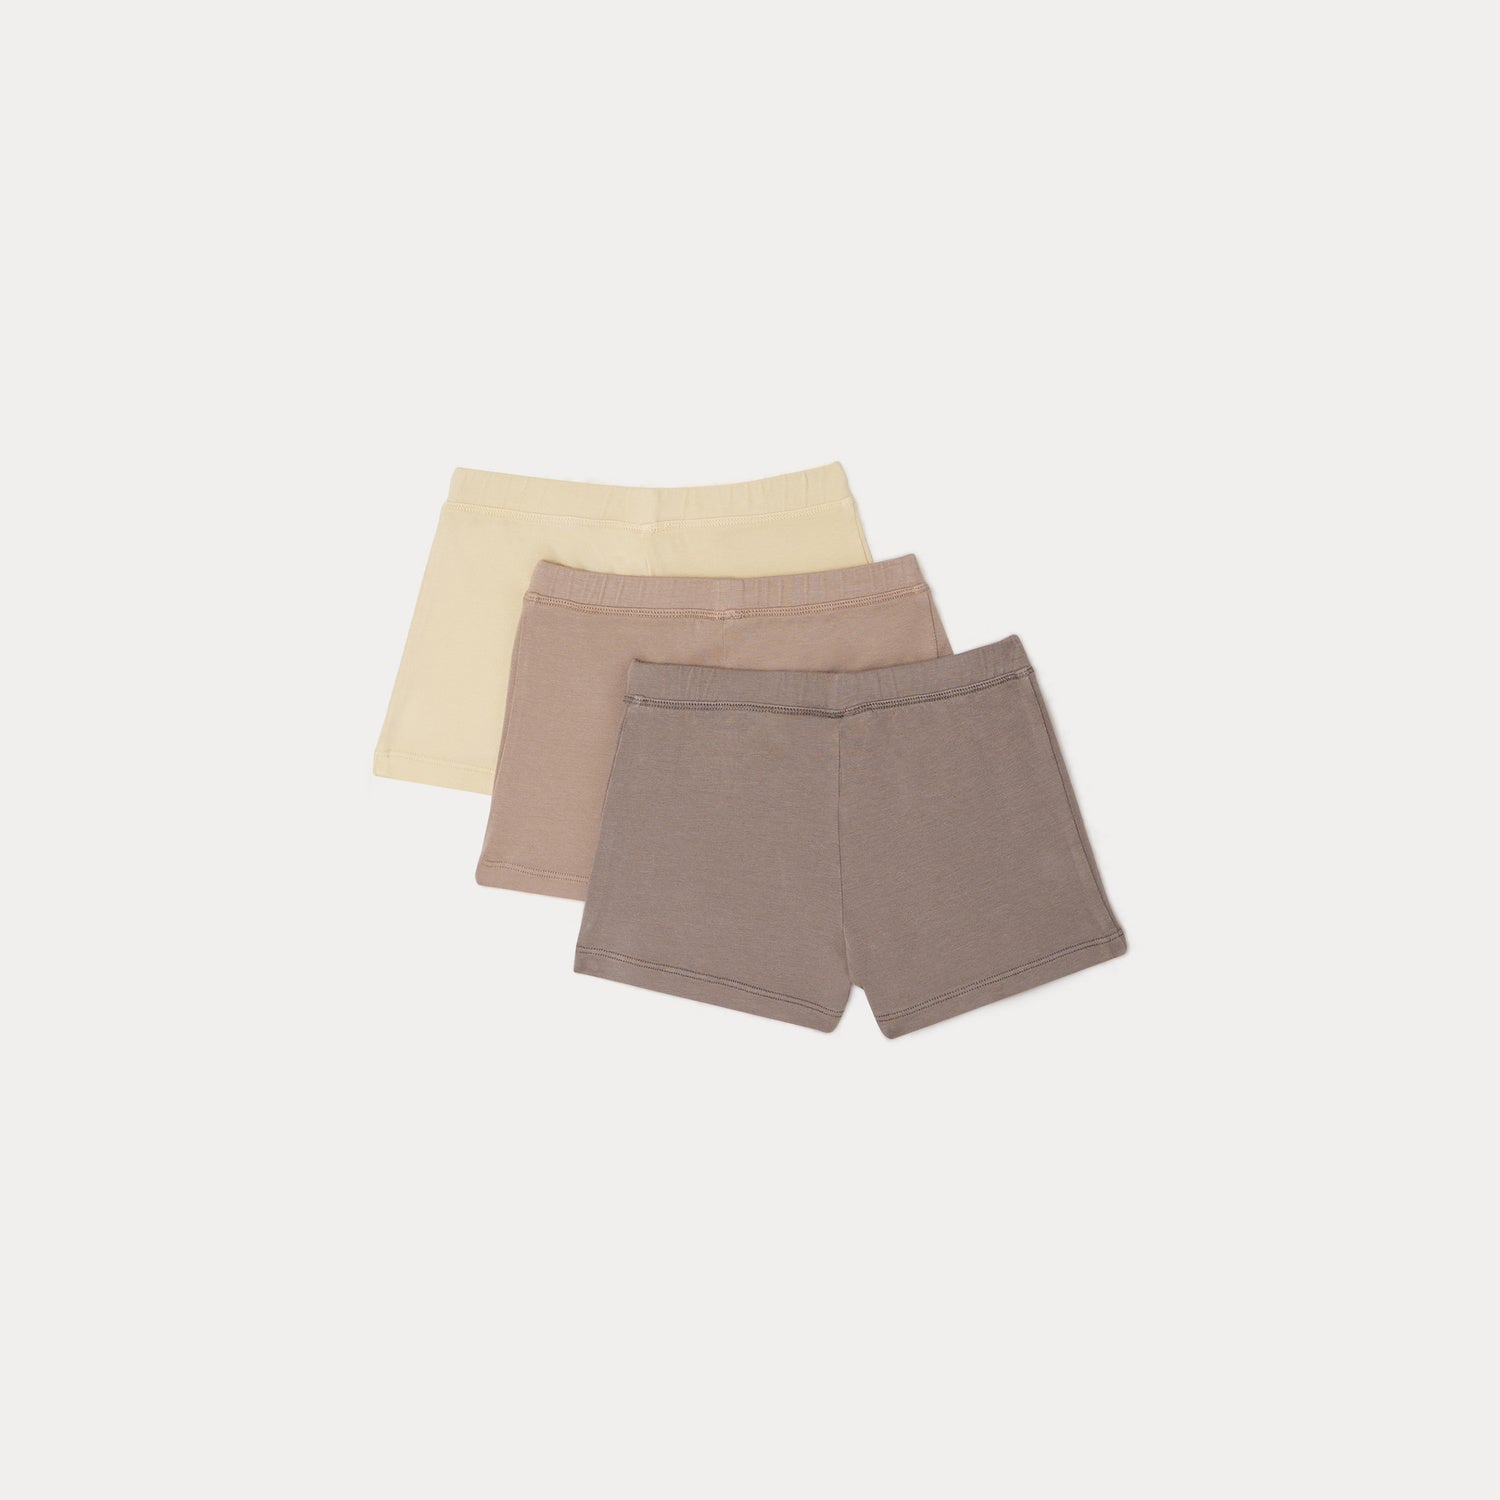 Boys Multicolor Cotton Underwear Set(3 Pack)